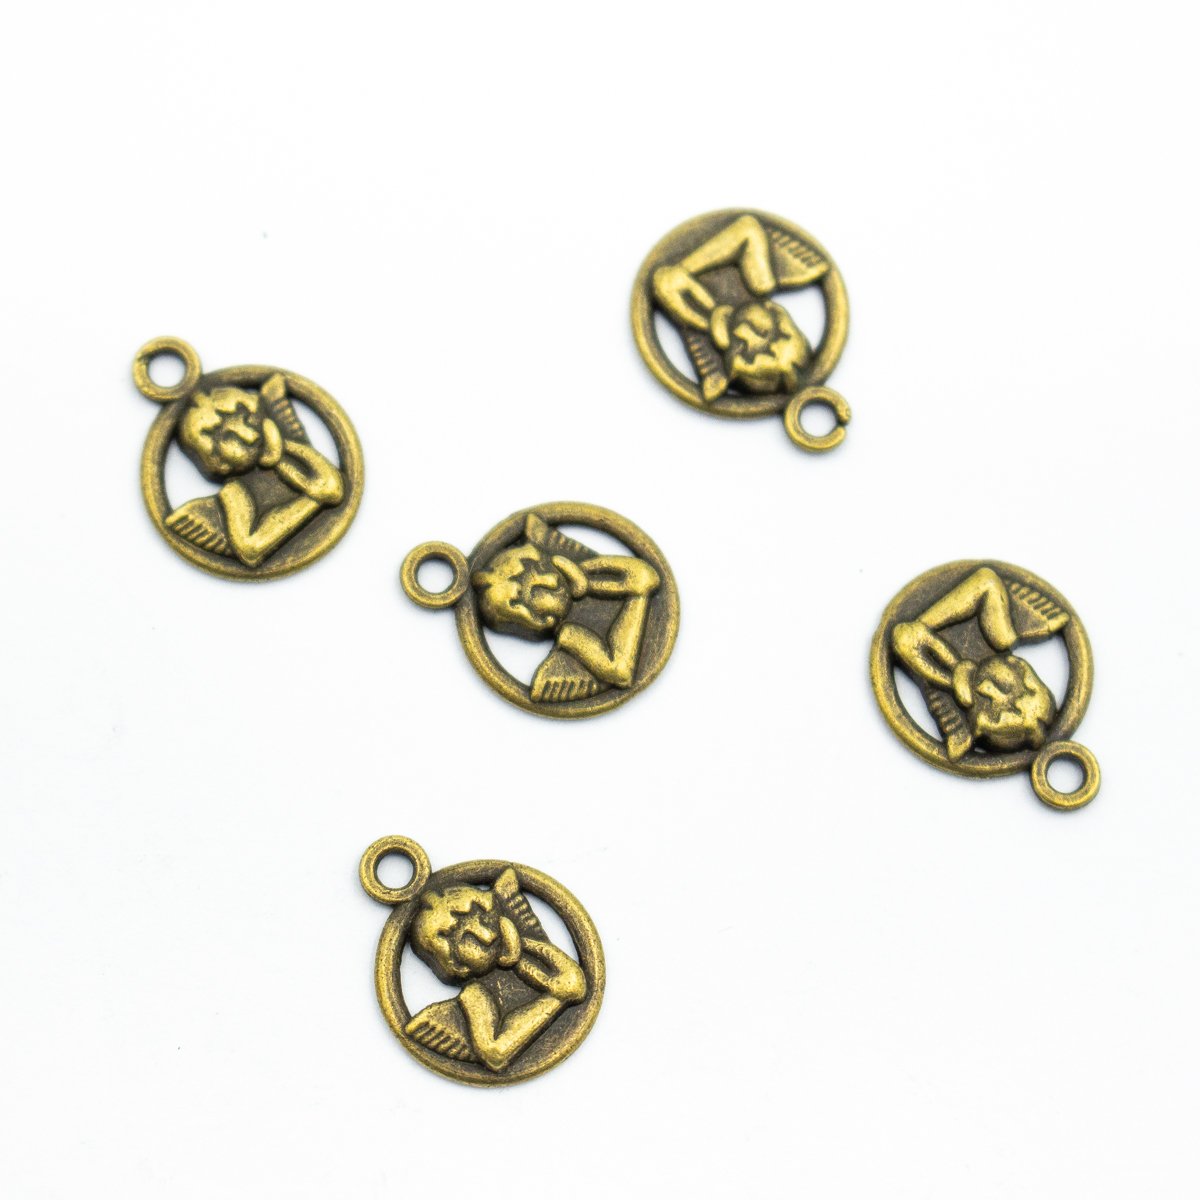 20pcs bronze necklace pendant, jewelry finding suppliers D-3-198